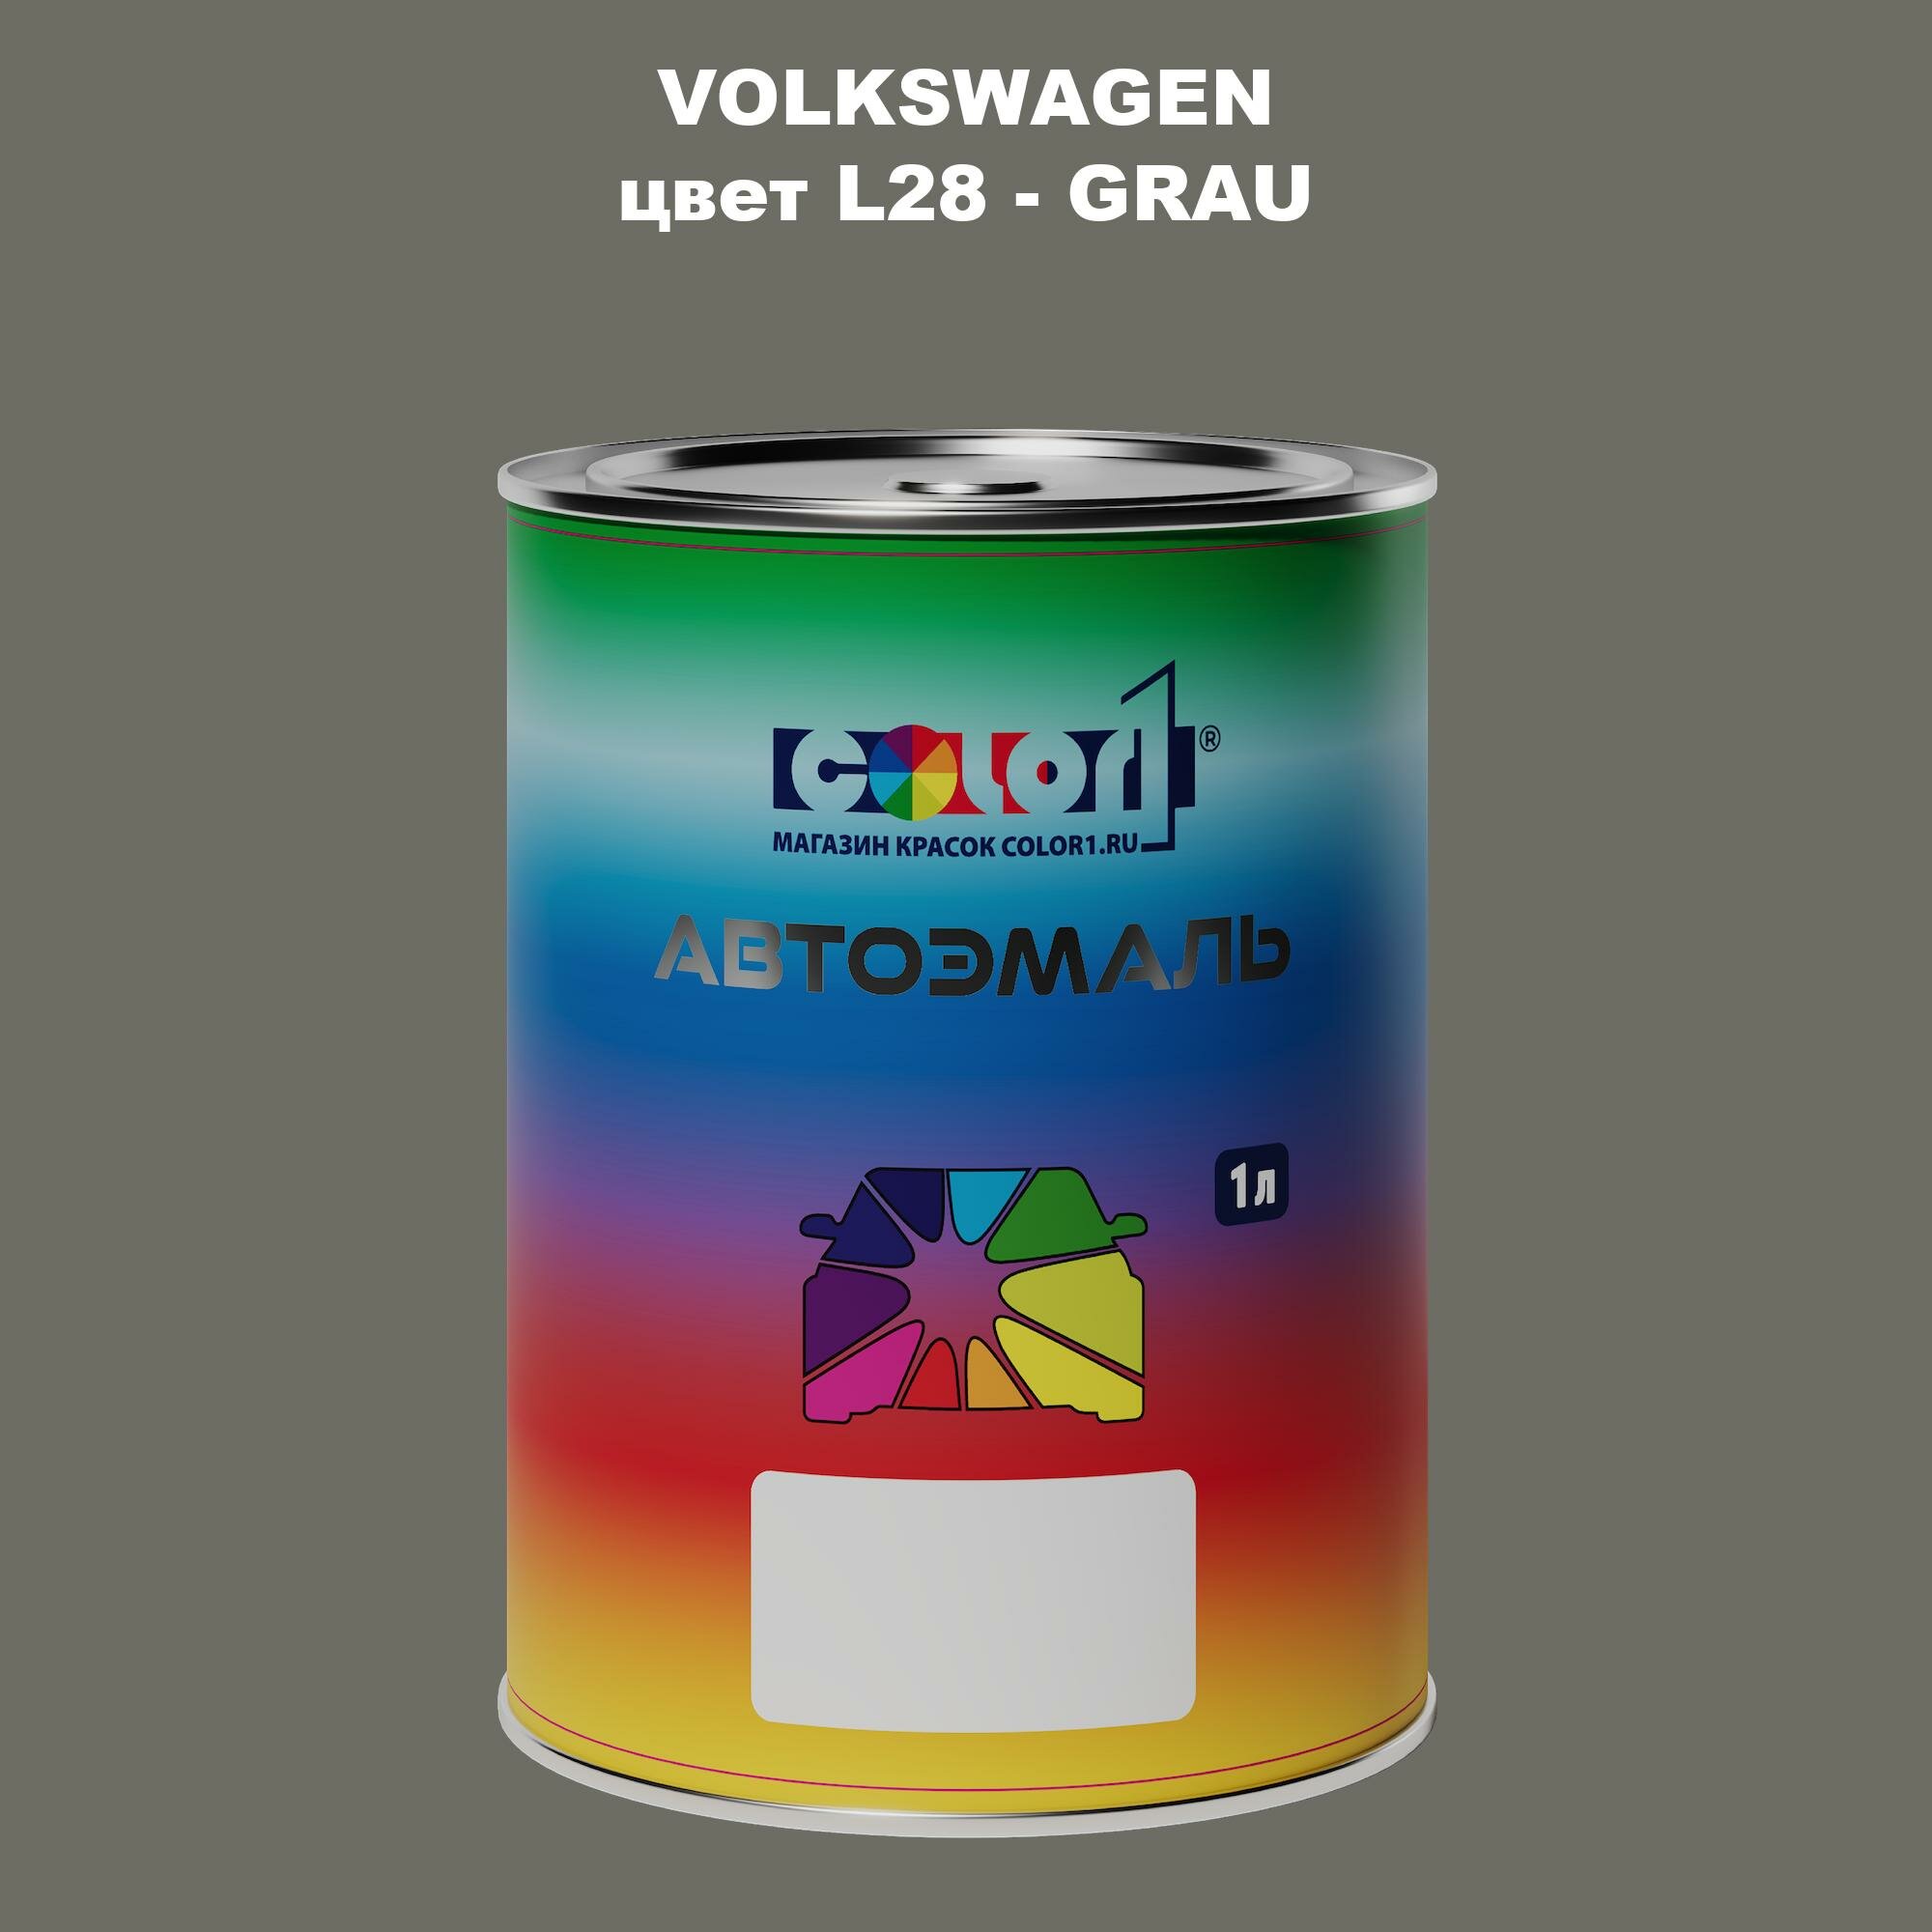 Автомобильная краска COLOR1 для VOLKSWAGEN, цвет L28 - GRAU